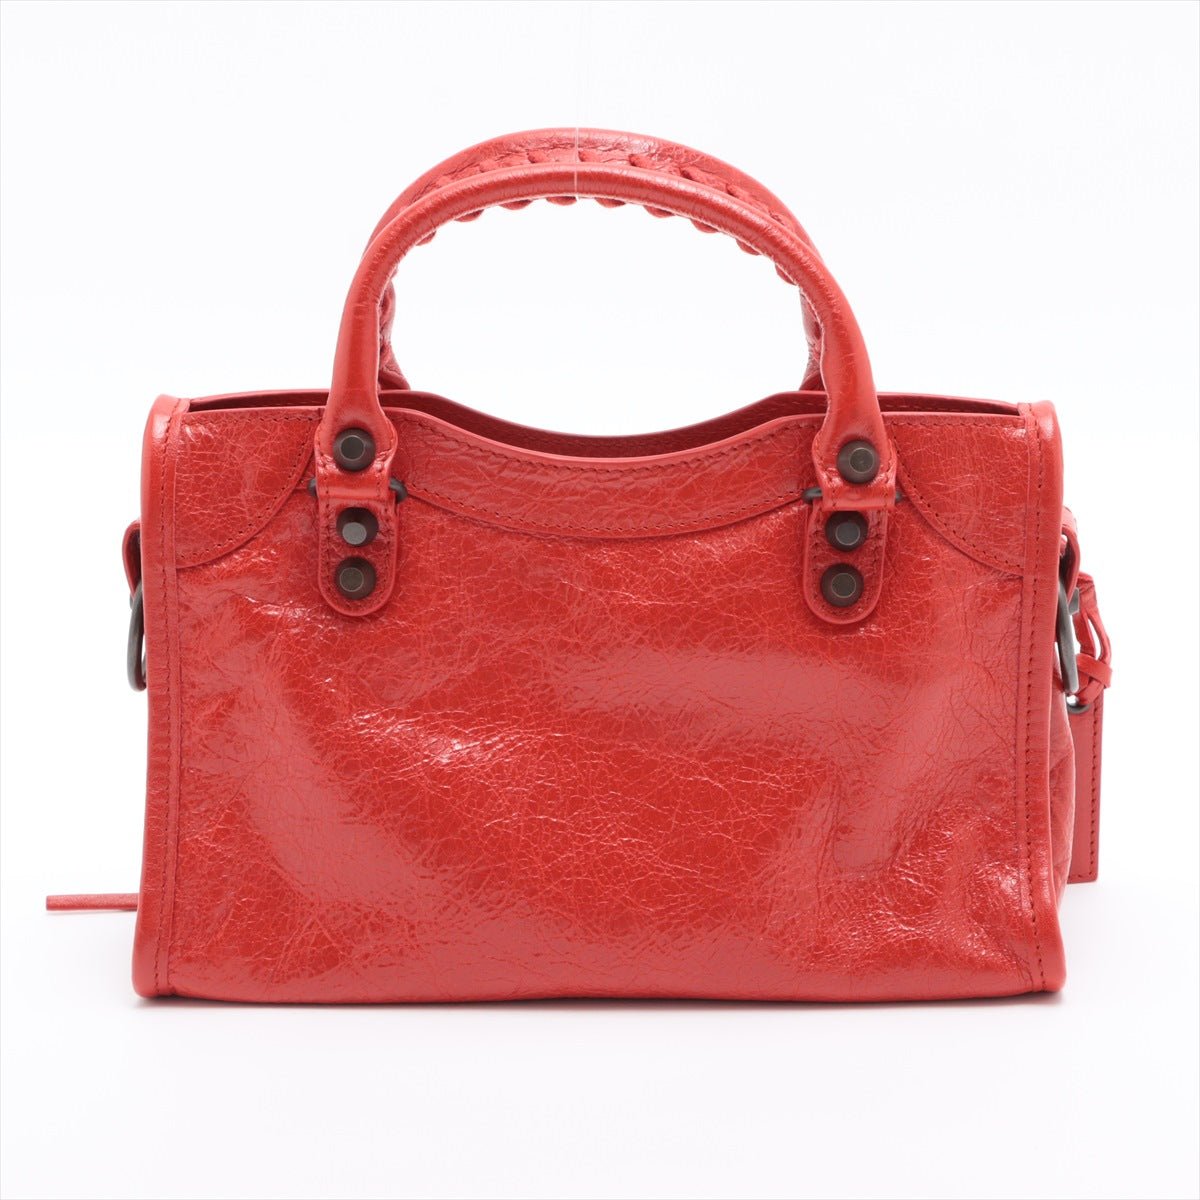 City leather handbag Balenciaga Red in Leather - 41899941